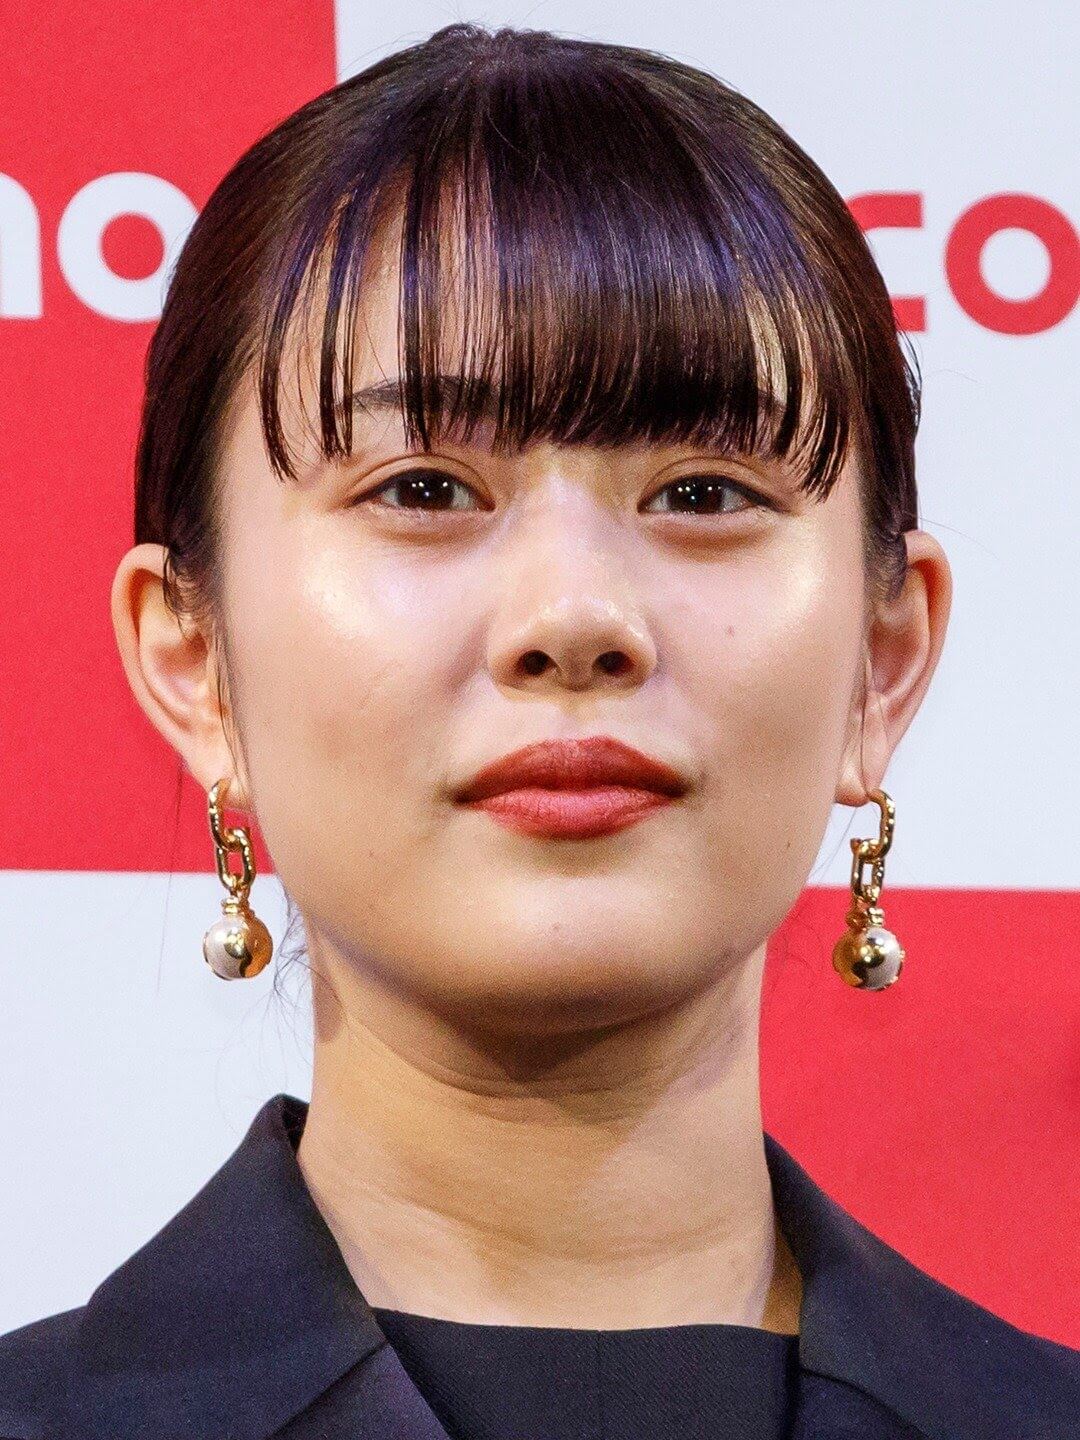 Mitsuki Takahata